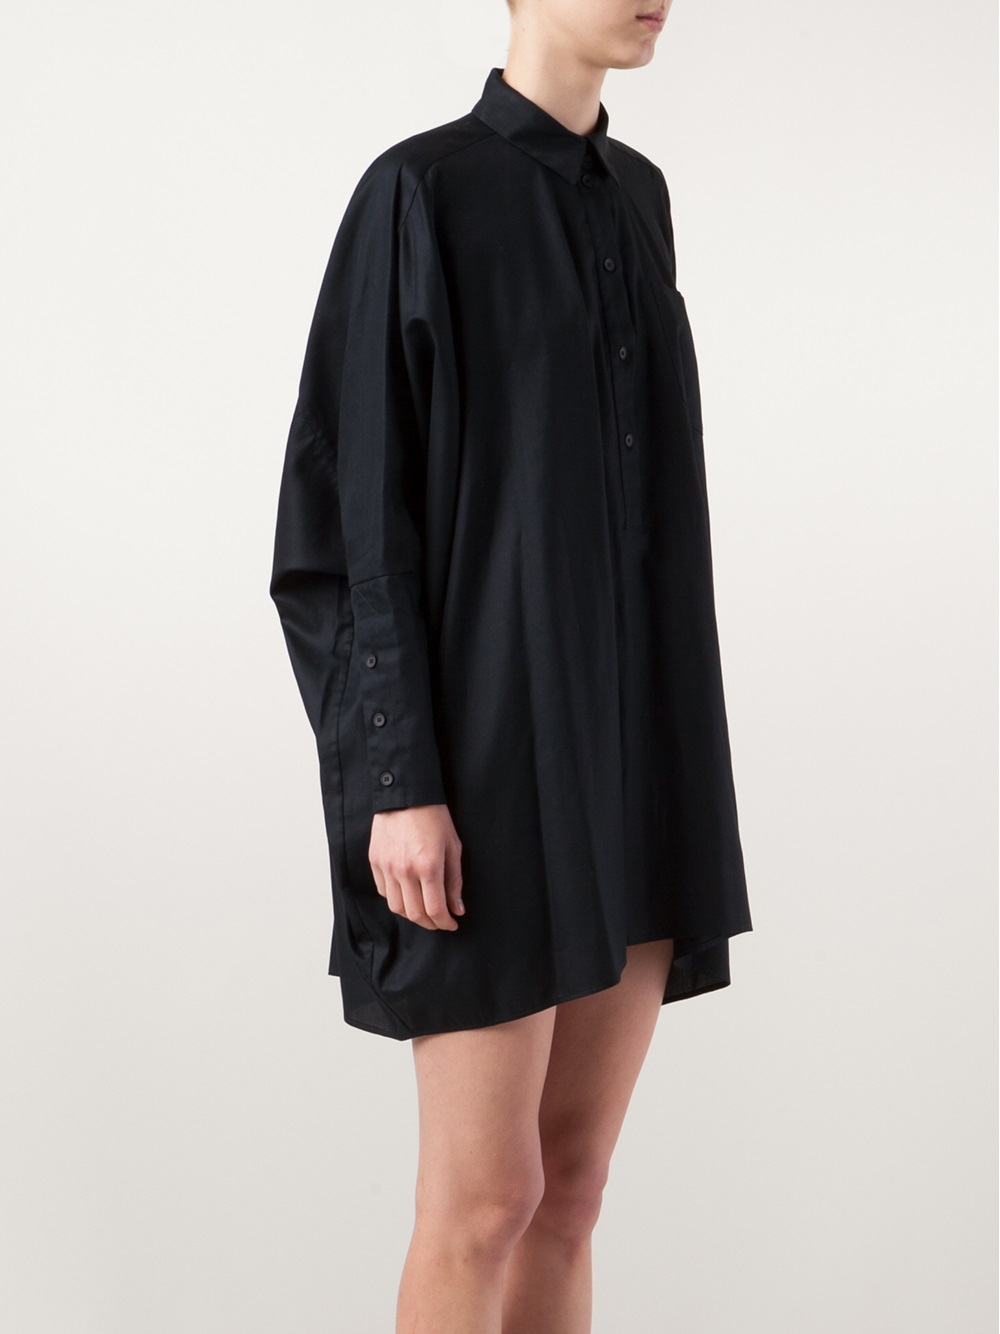 MM6 by Maison Martin Margiela Shirt Dress in Black - Lyst